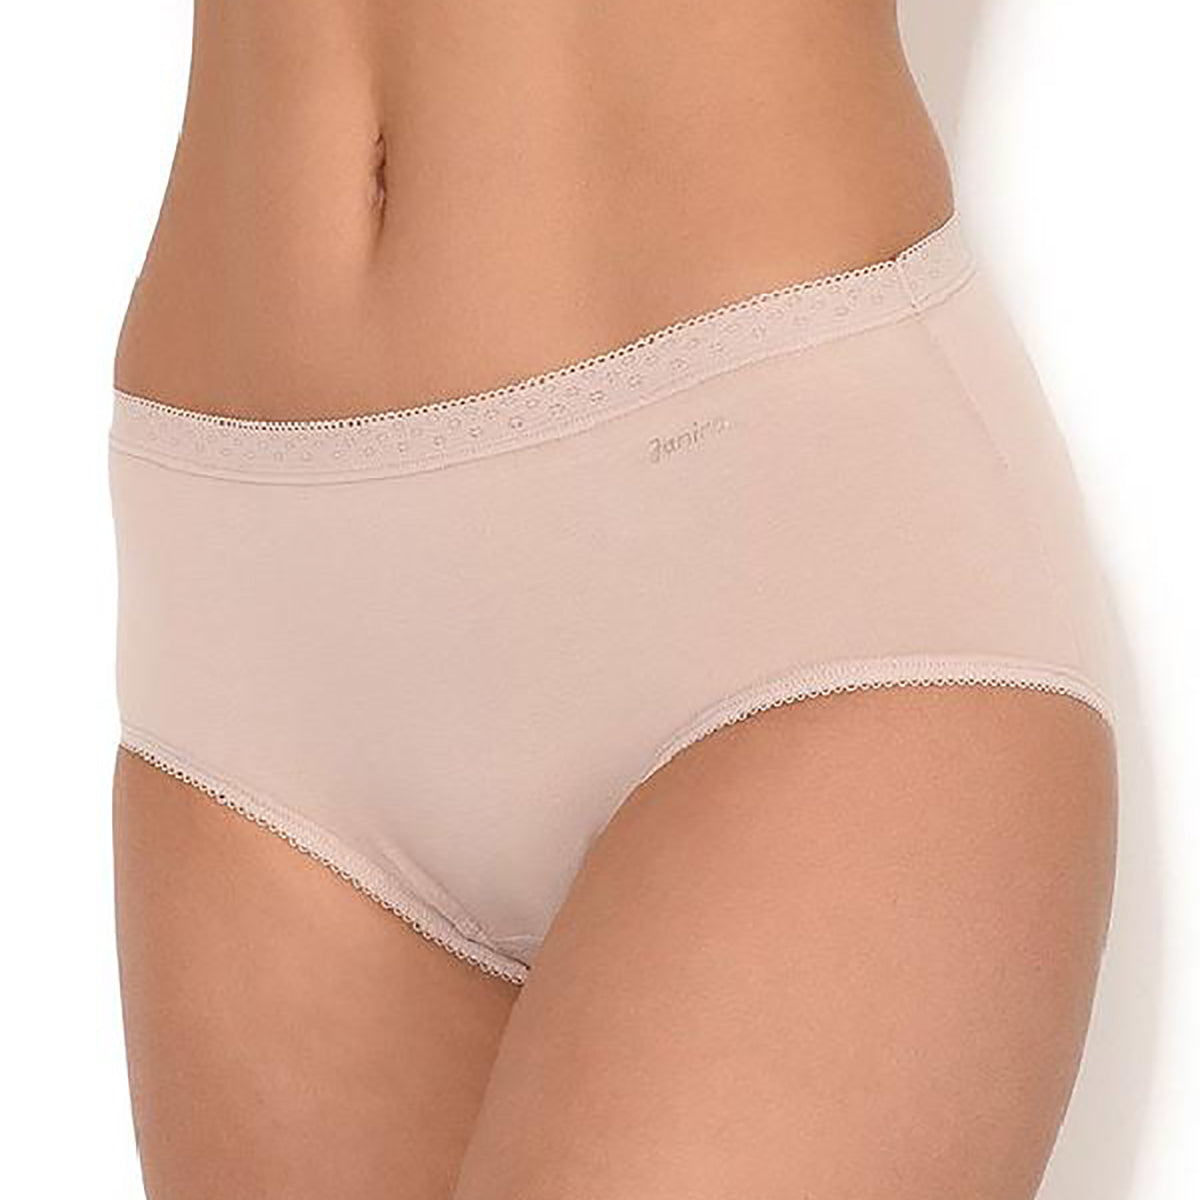 Janira essential cotton panty brief lingerie canada in nude dune beige underwear linea intima multi pack